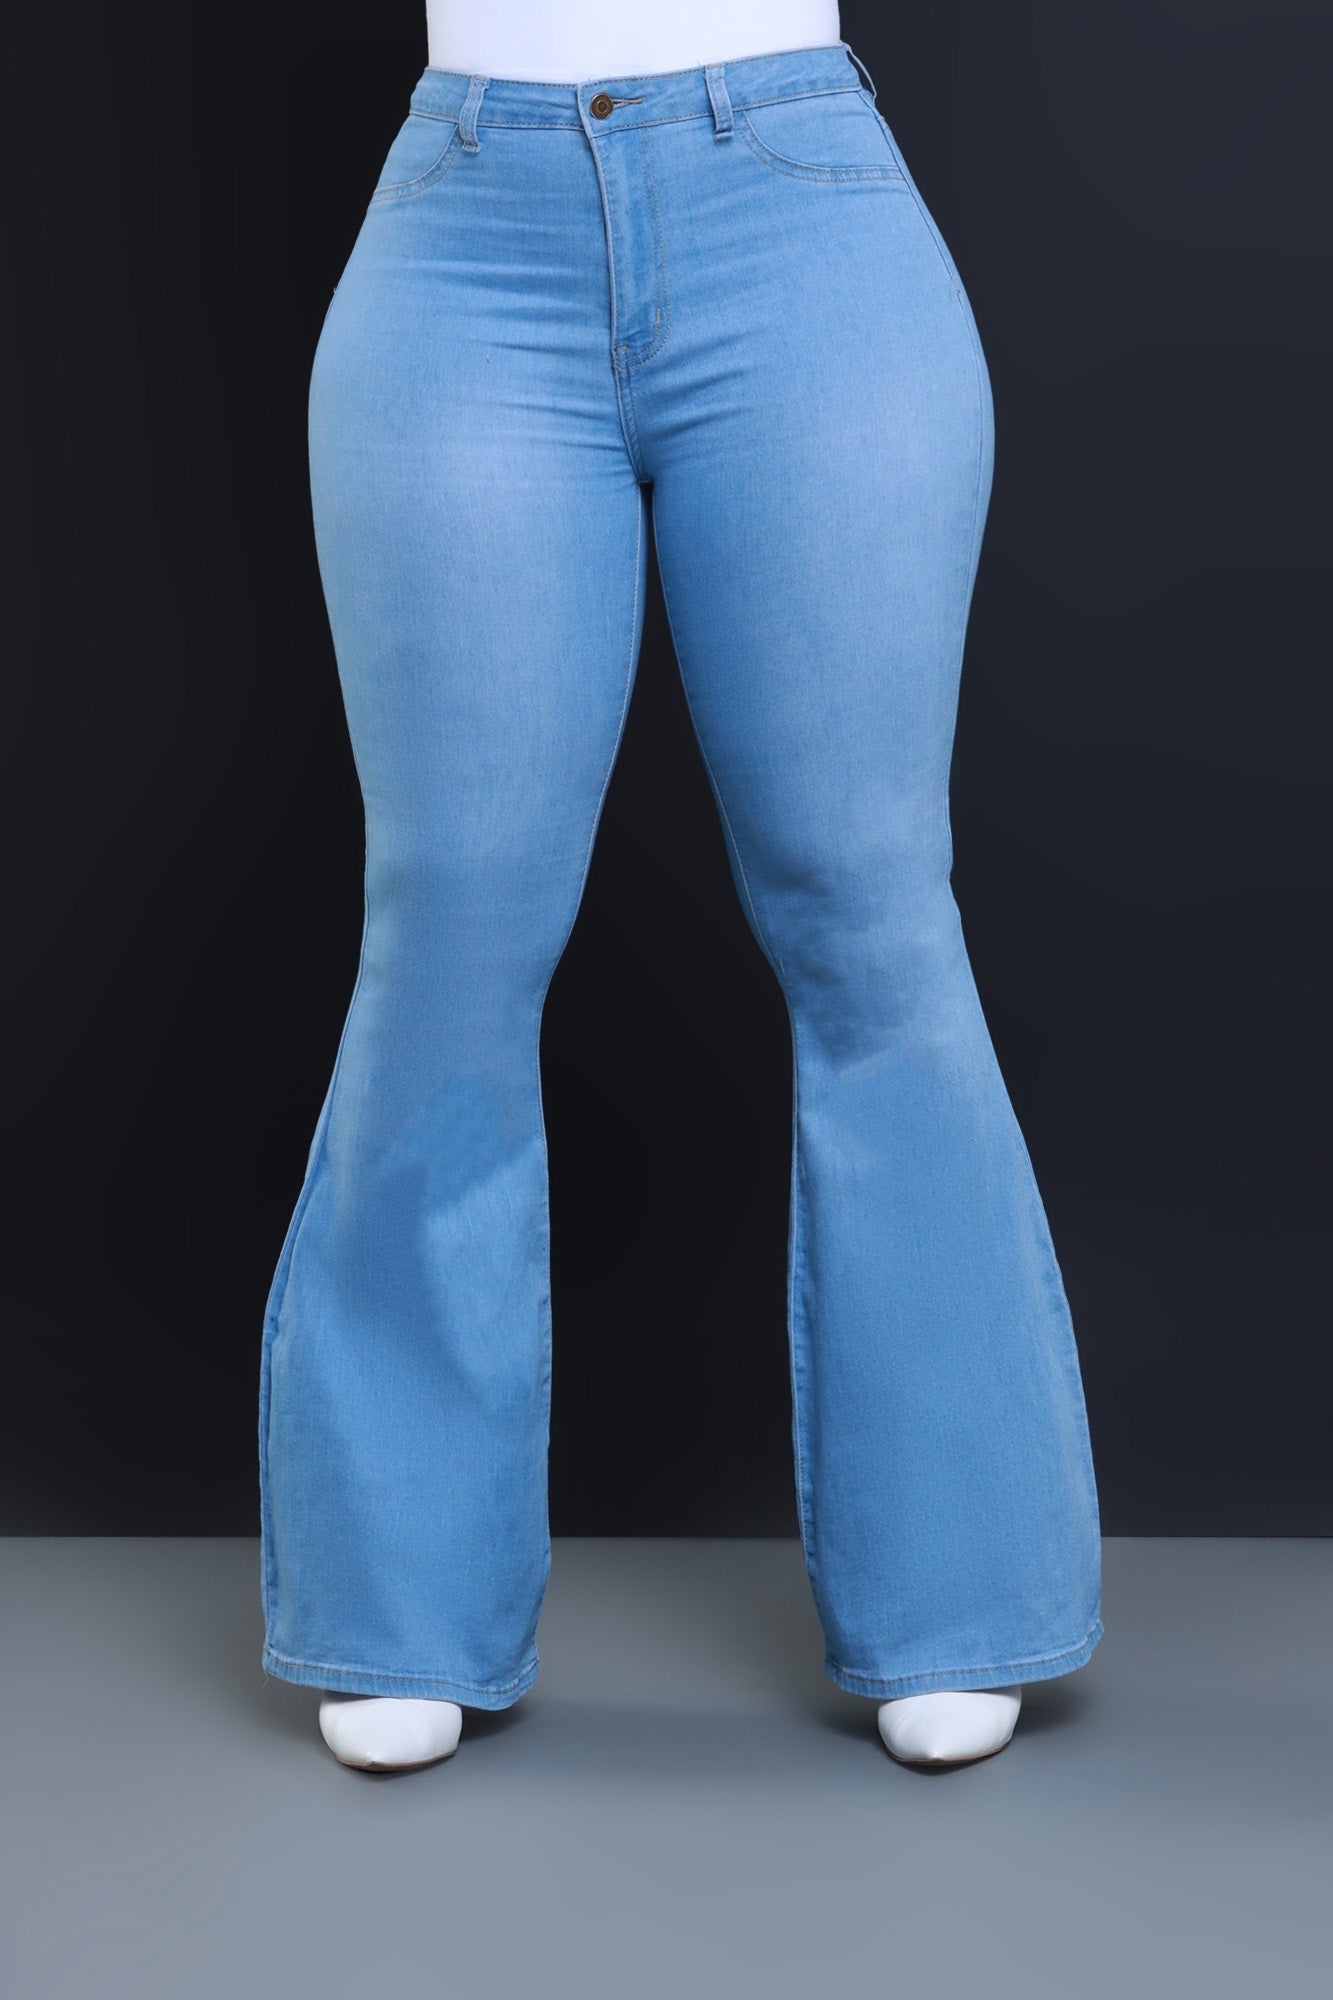 $15.99 Bing High Waist Stretchy Bell Bottom Jeans - Light Wash - Swank A Posh